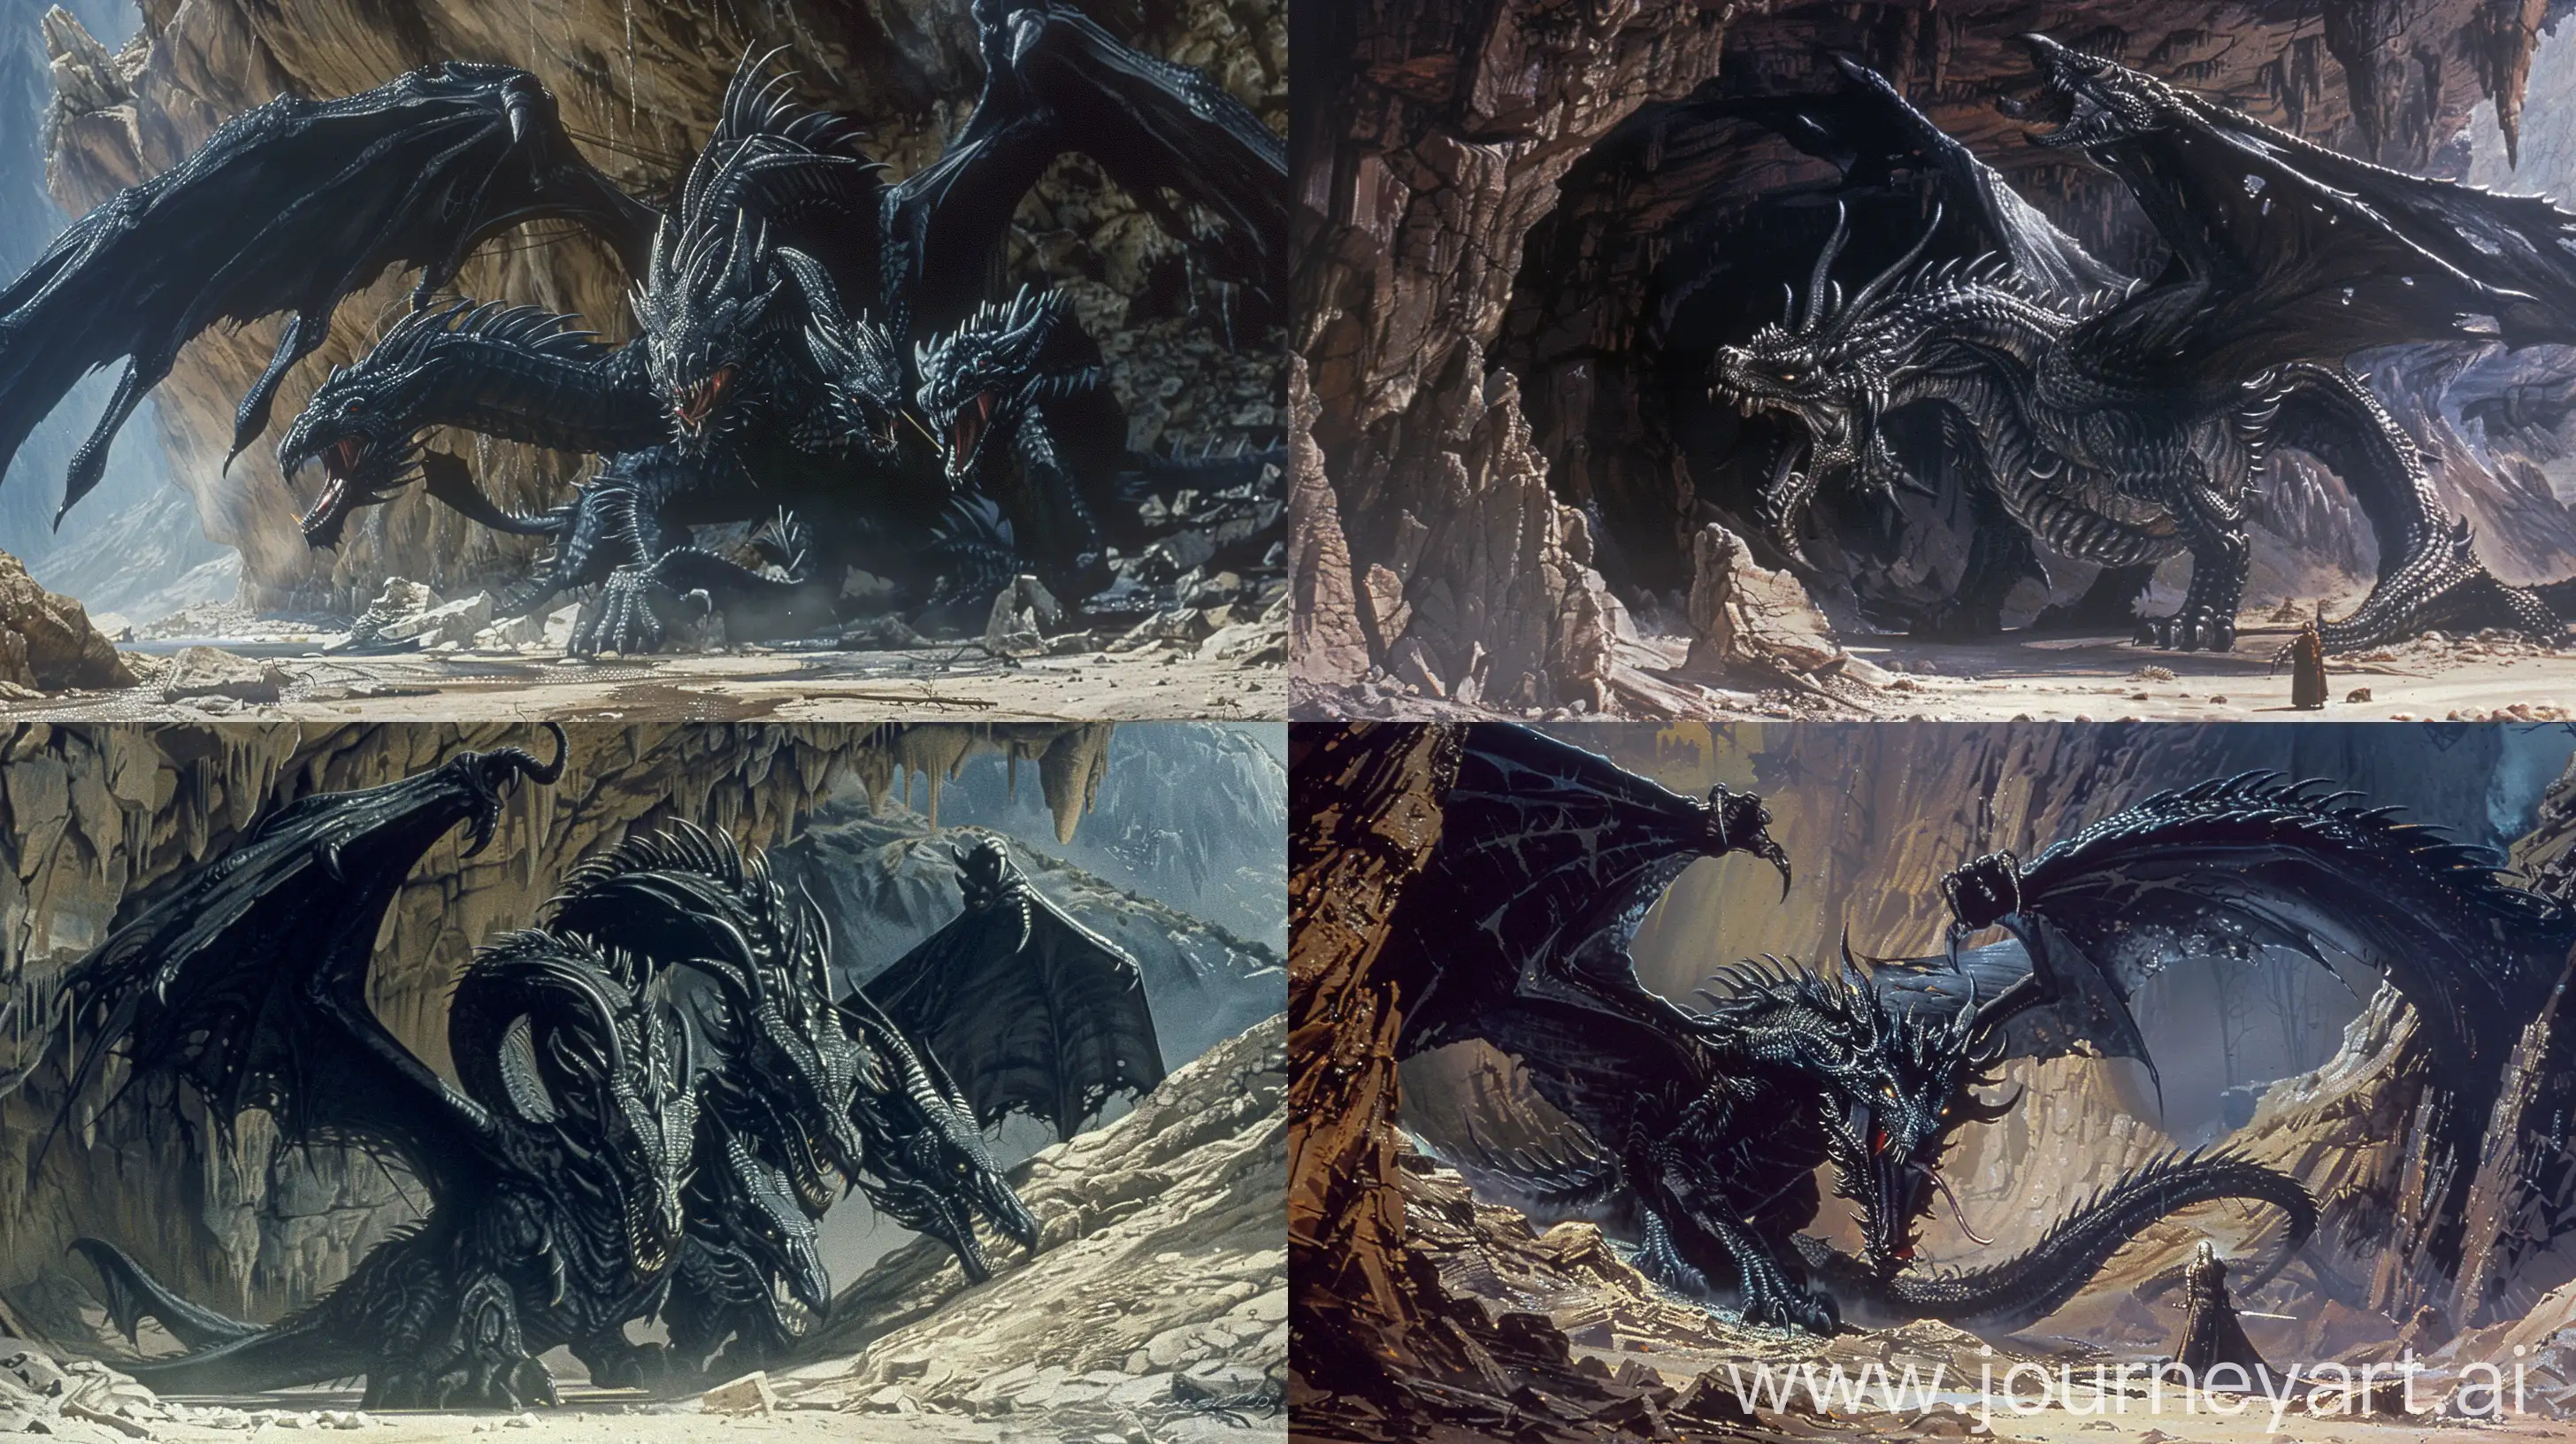 Illustrated-Scene-of-a-FourHeaded-Black-Dragon-in-Dark-Fantasy-Setting